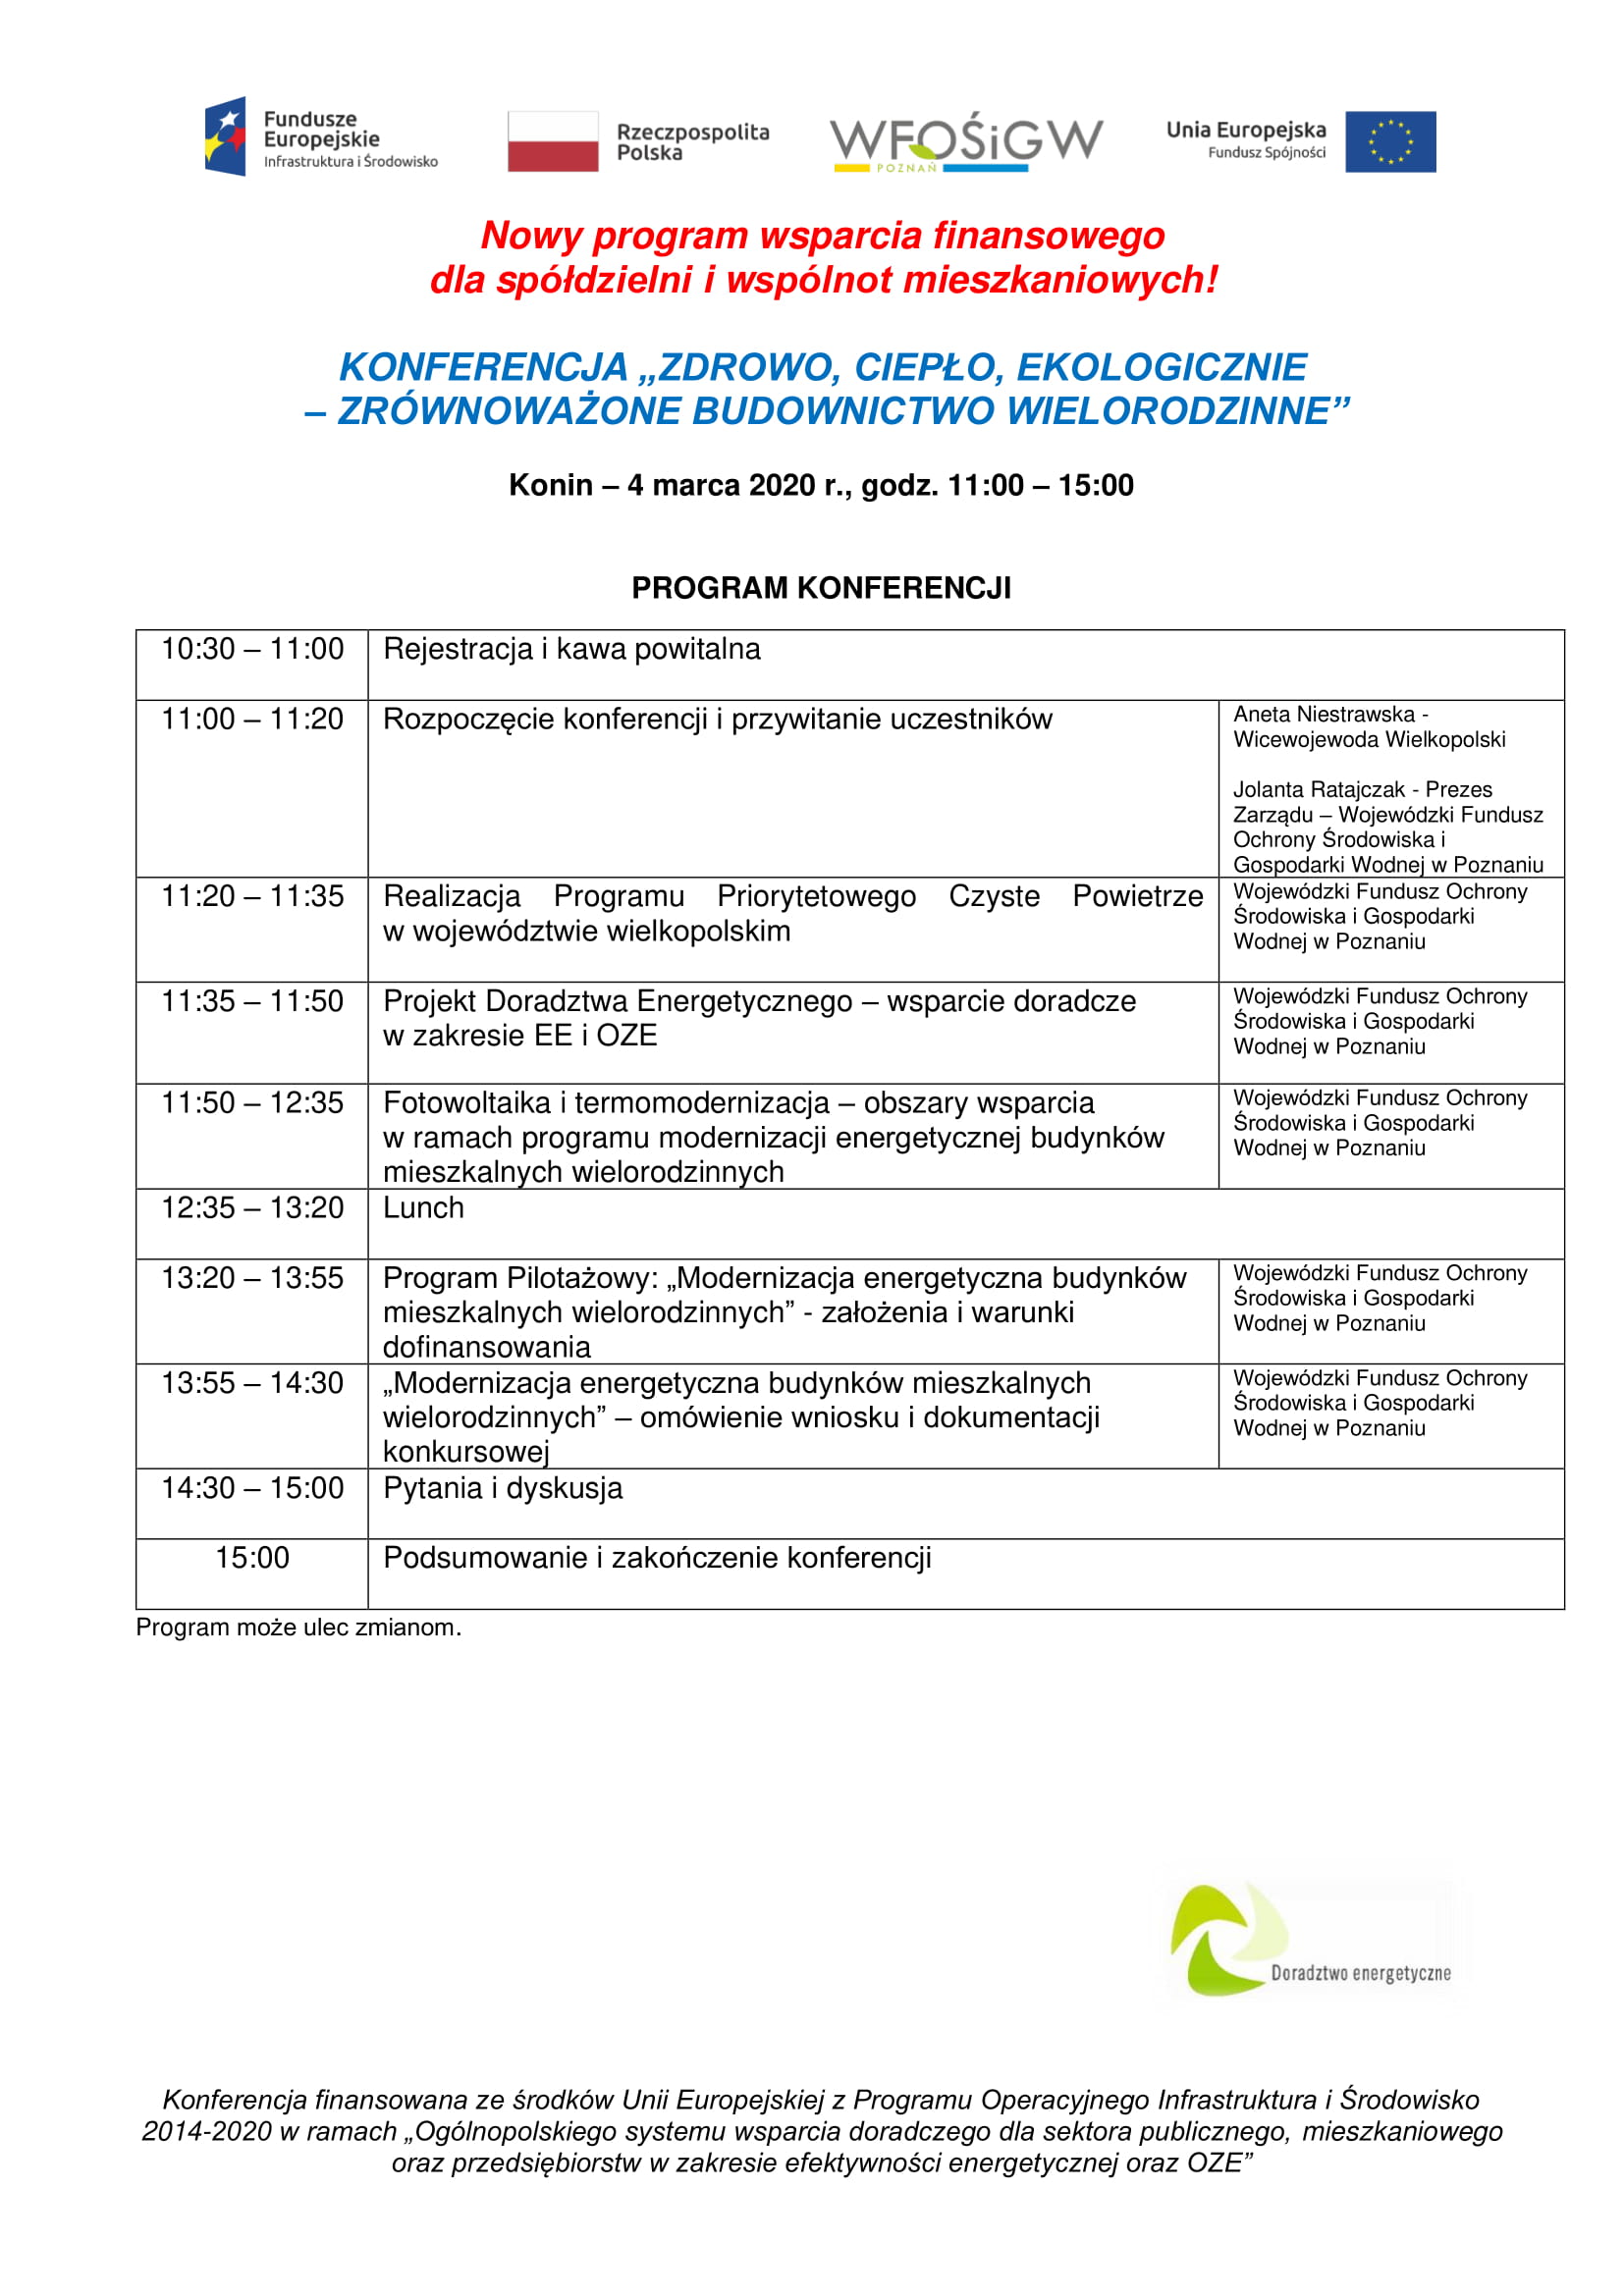 Agenda Konferencji Konin 04.03.2020